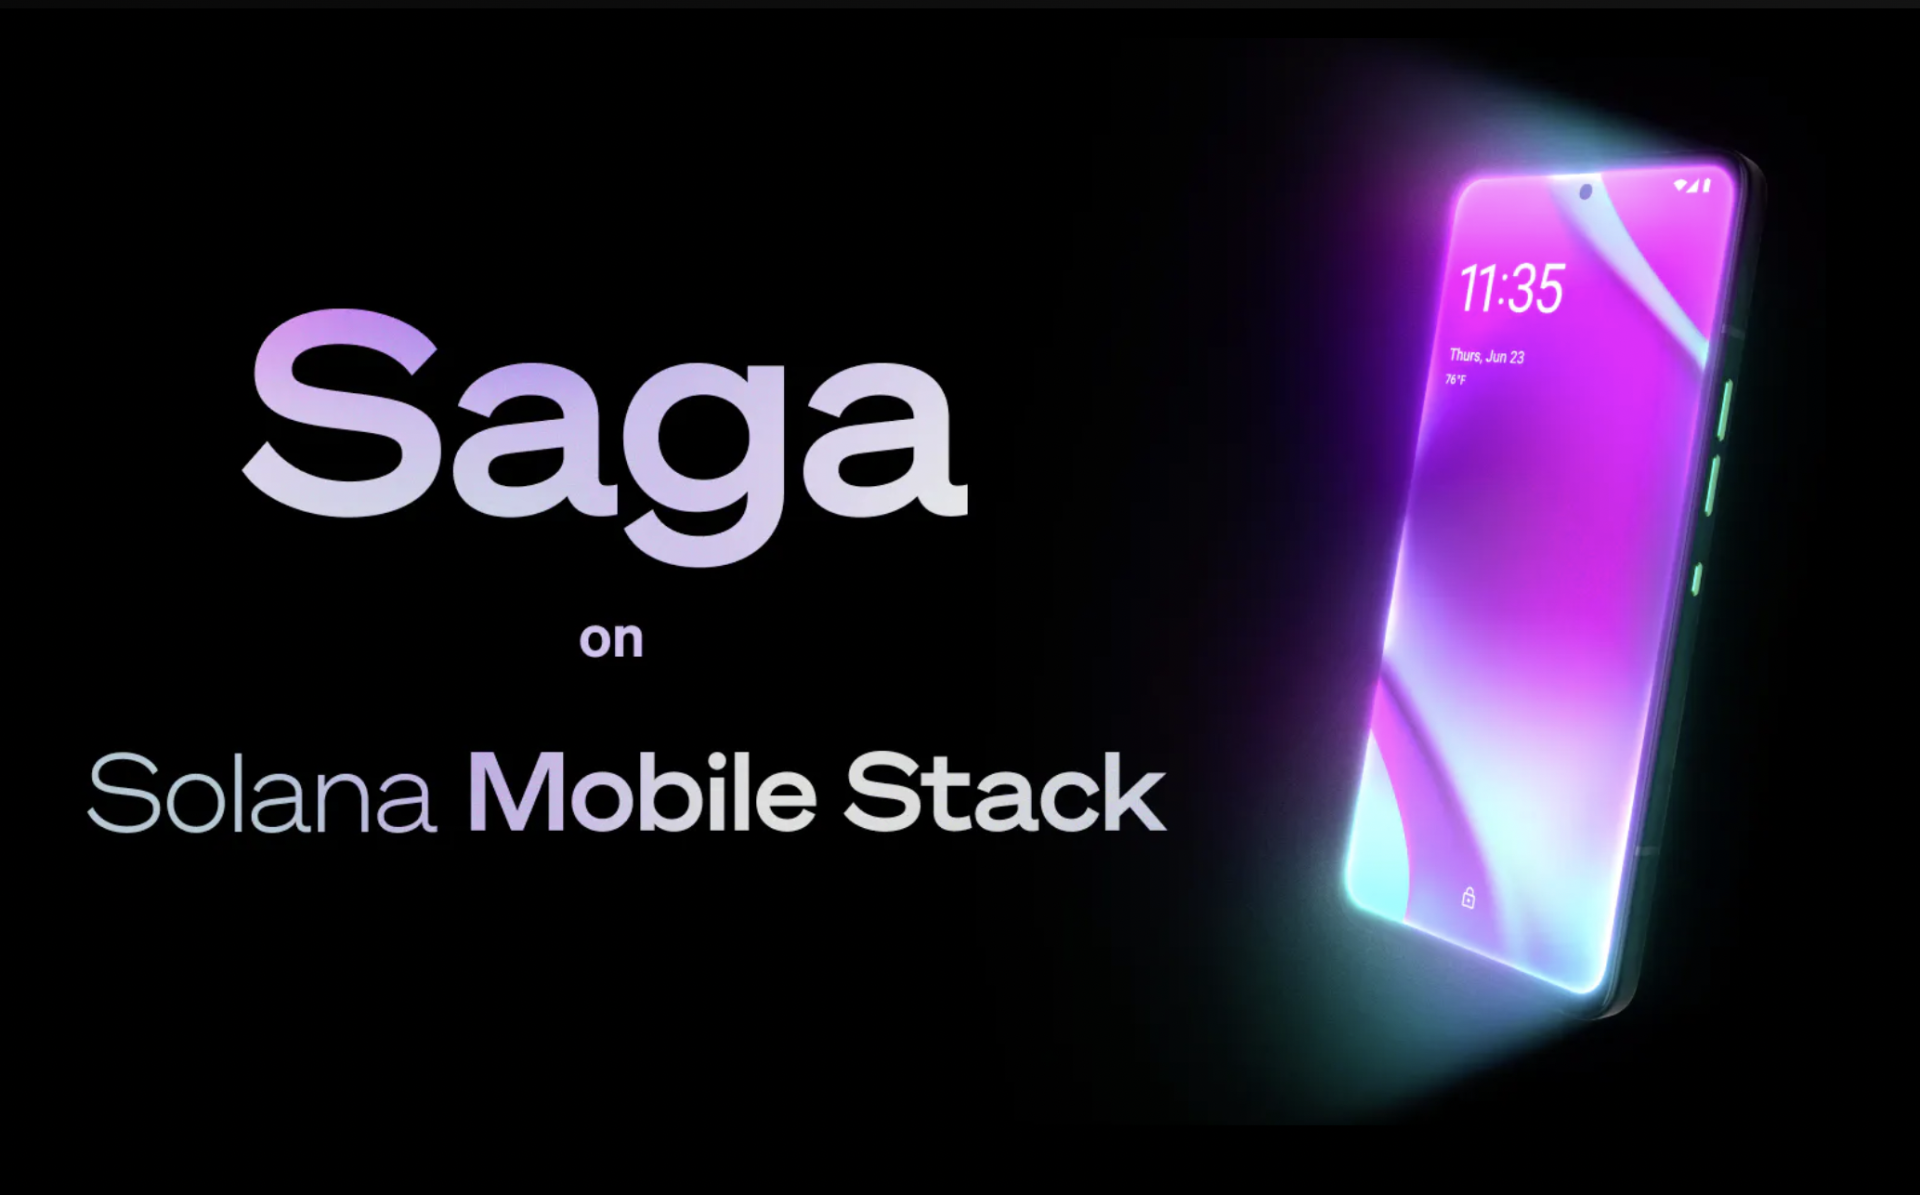 An image of Saga smartphone on black background. 